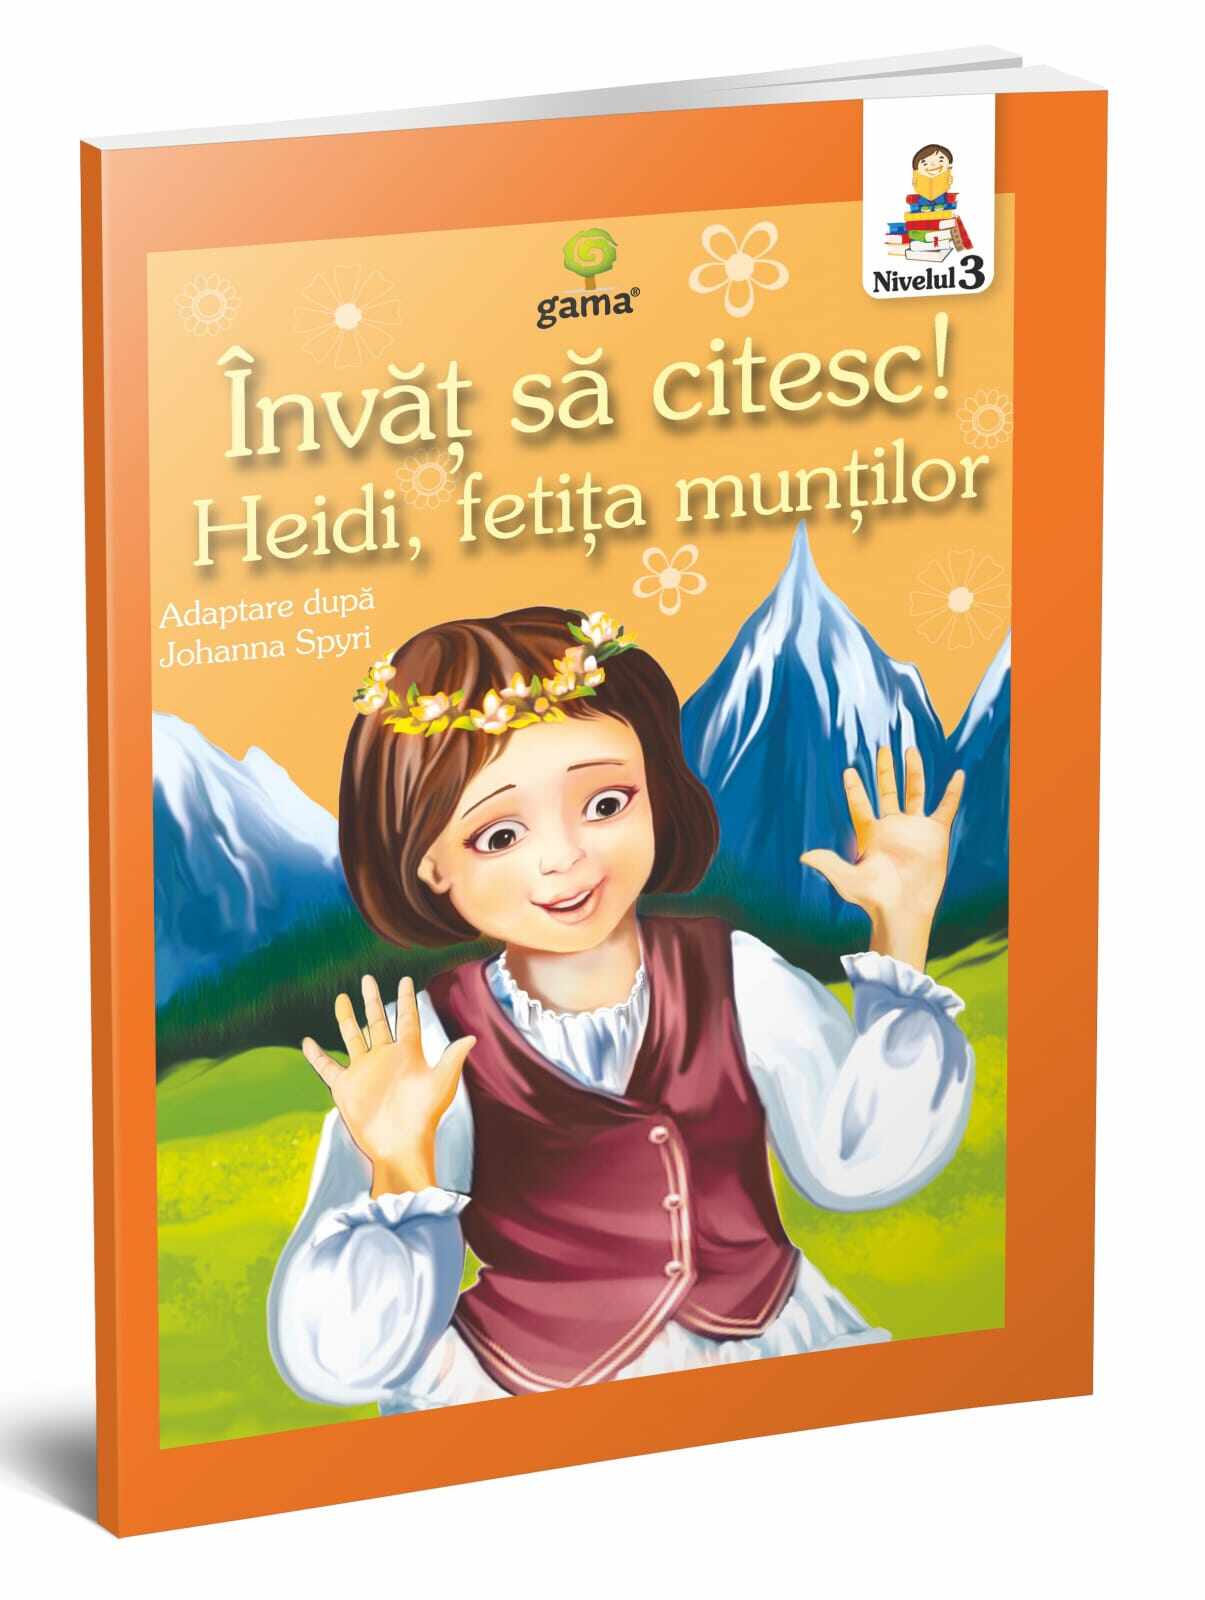 Heidi, fetita muntilor, Editura Gama, 4-5 ani +